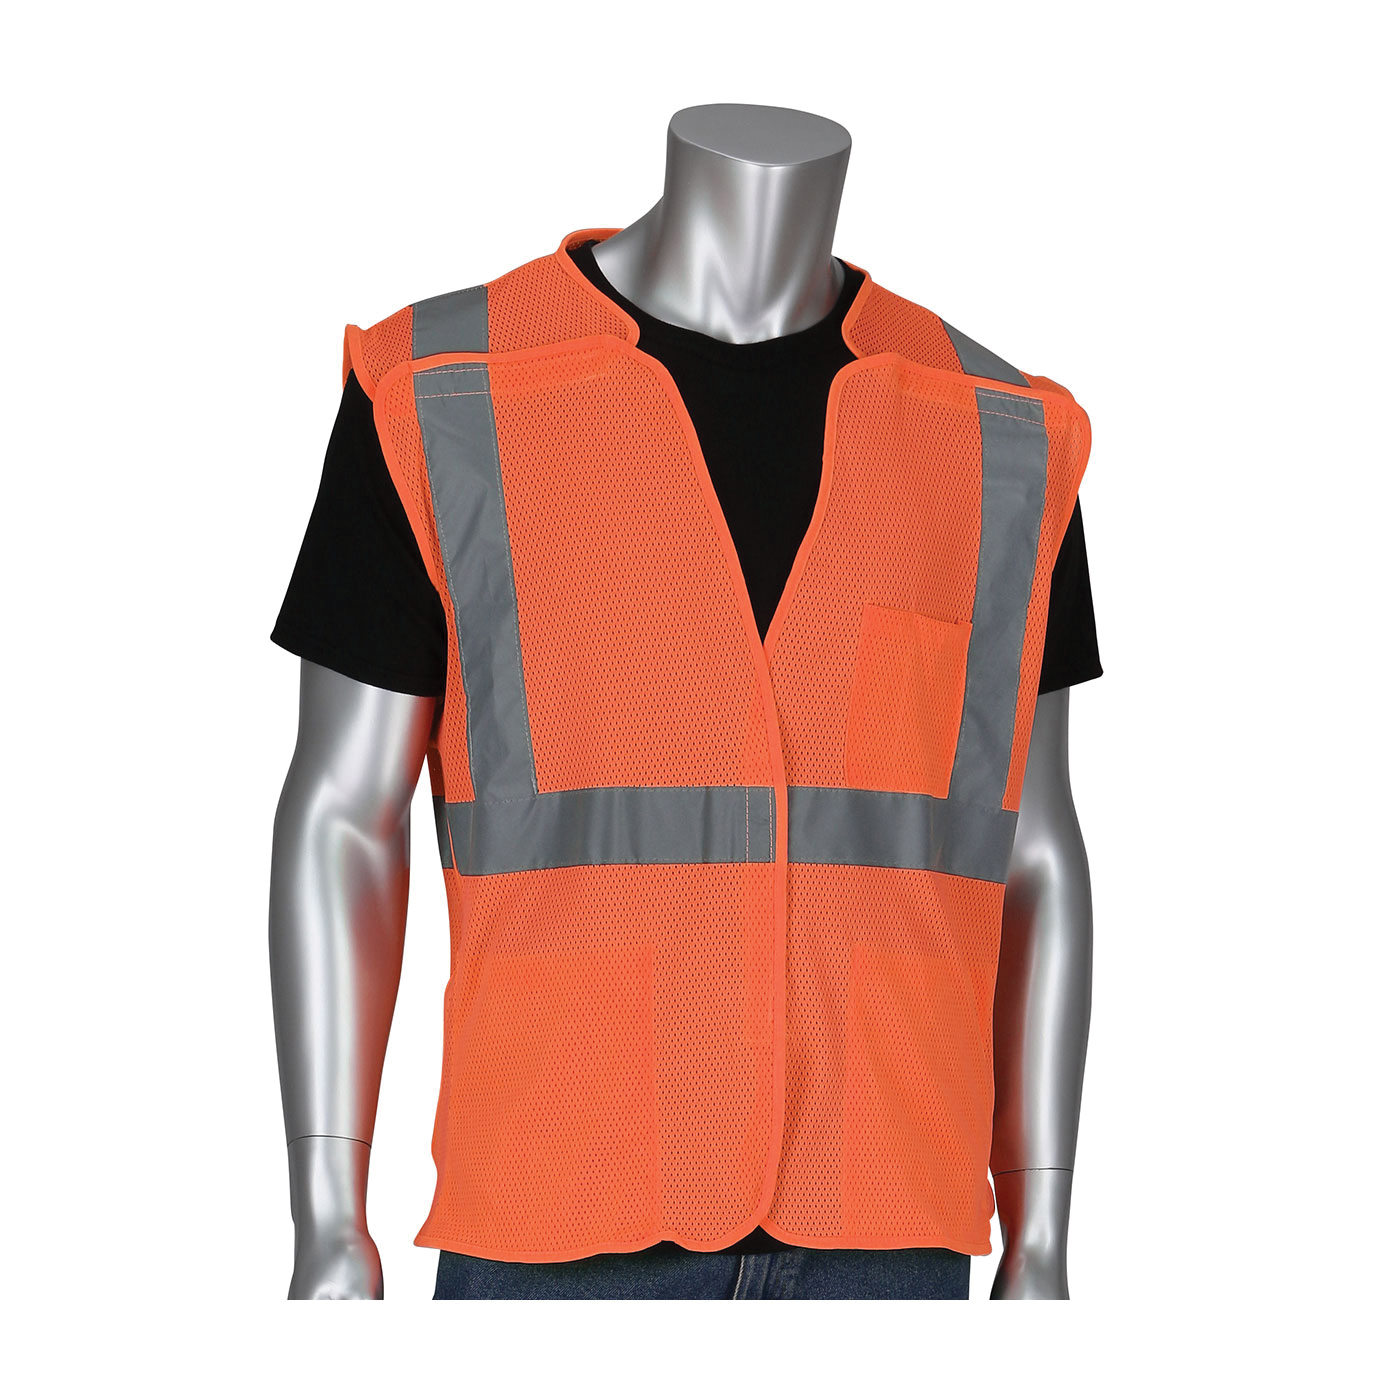 PIP® 302-5PMVOR-M Safety Vest, M, Hi-Viz Orange, Polyester, Hook and Loop Closure, 3 Pockets, ANSI Class: Class 2, Specifications Met: ANSI 107 Type R